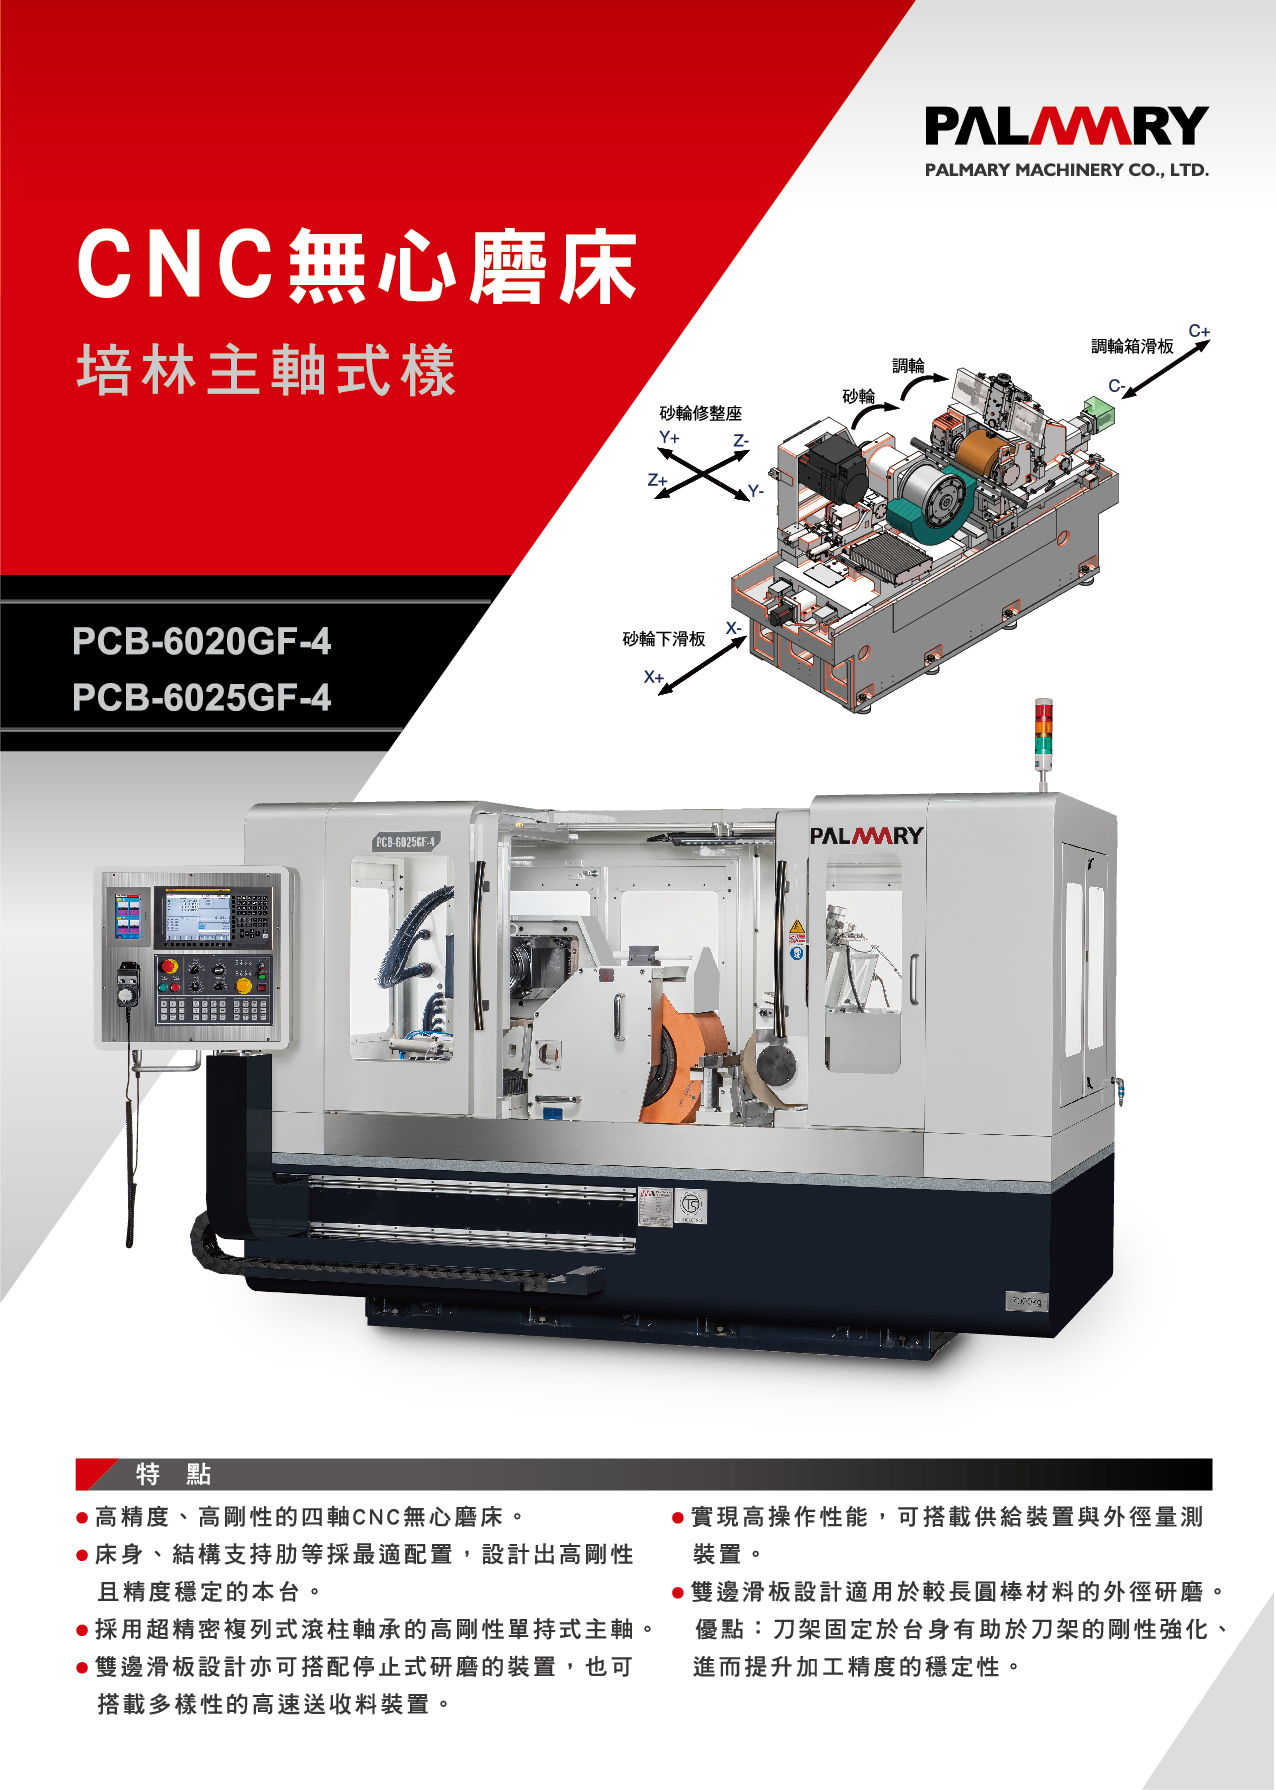 CNC 無心磨床- 培林式主軸系列 PCB-6025GF-4